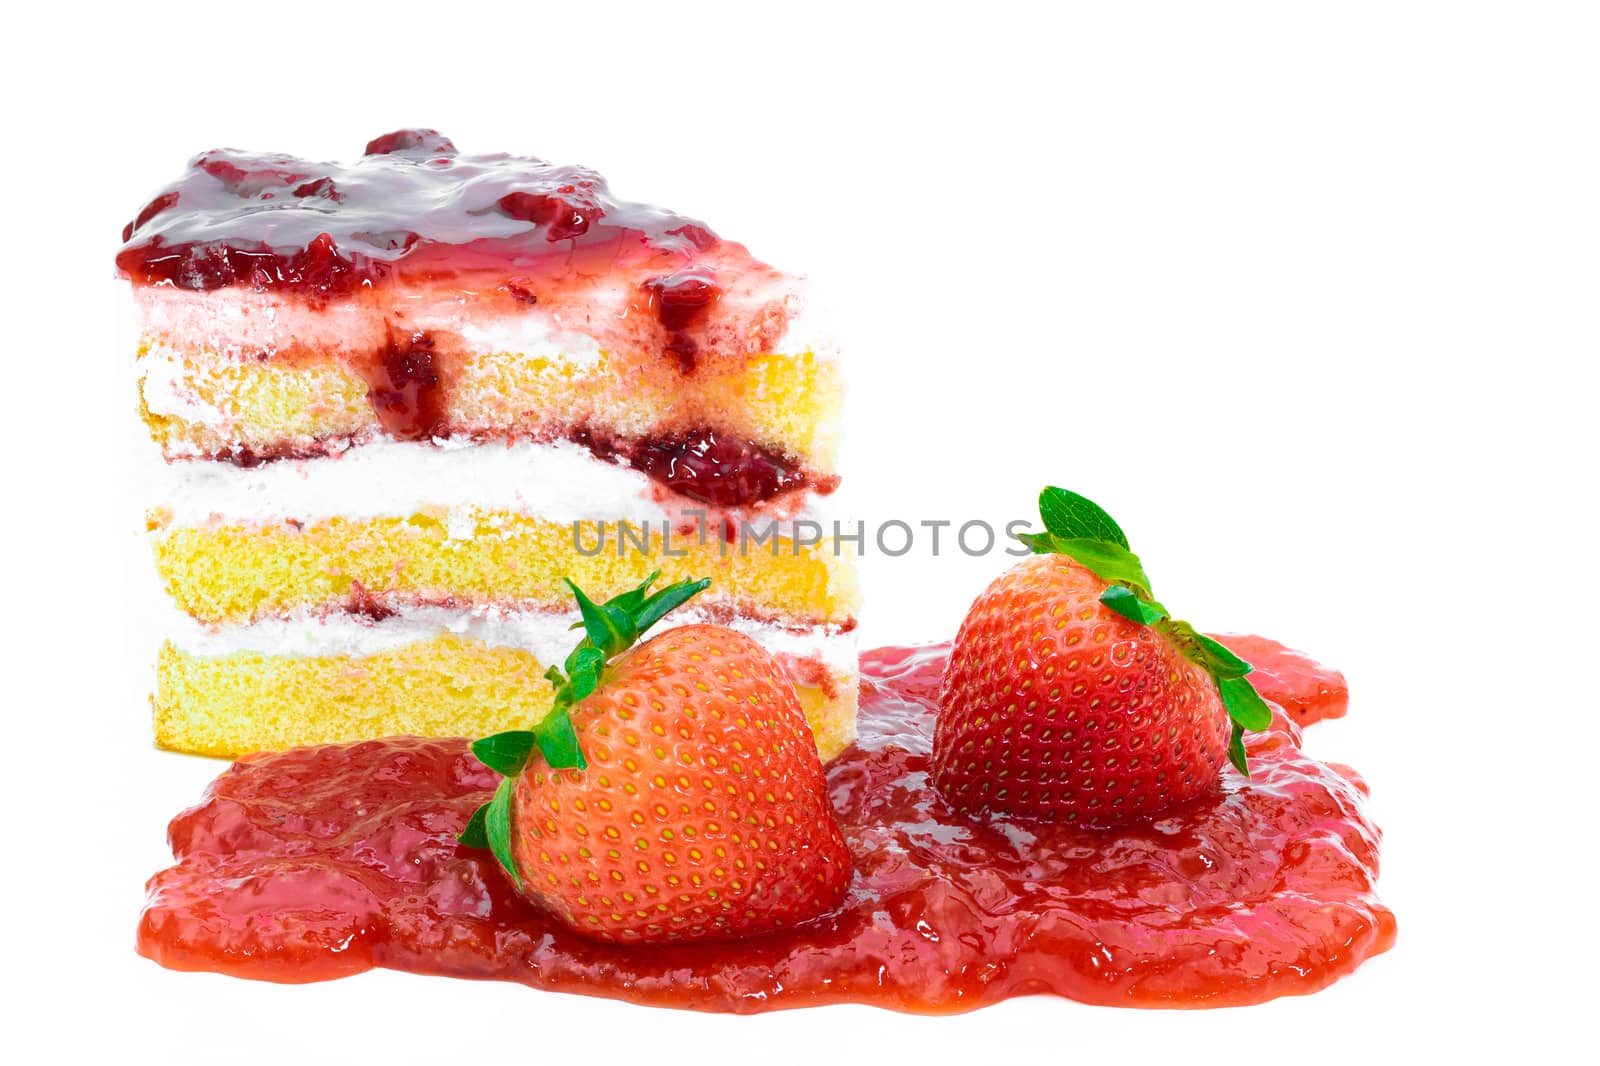 Cake Strawberry and Jam on white background.